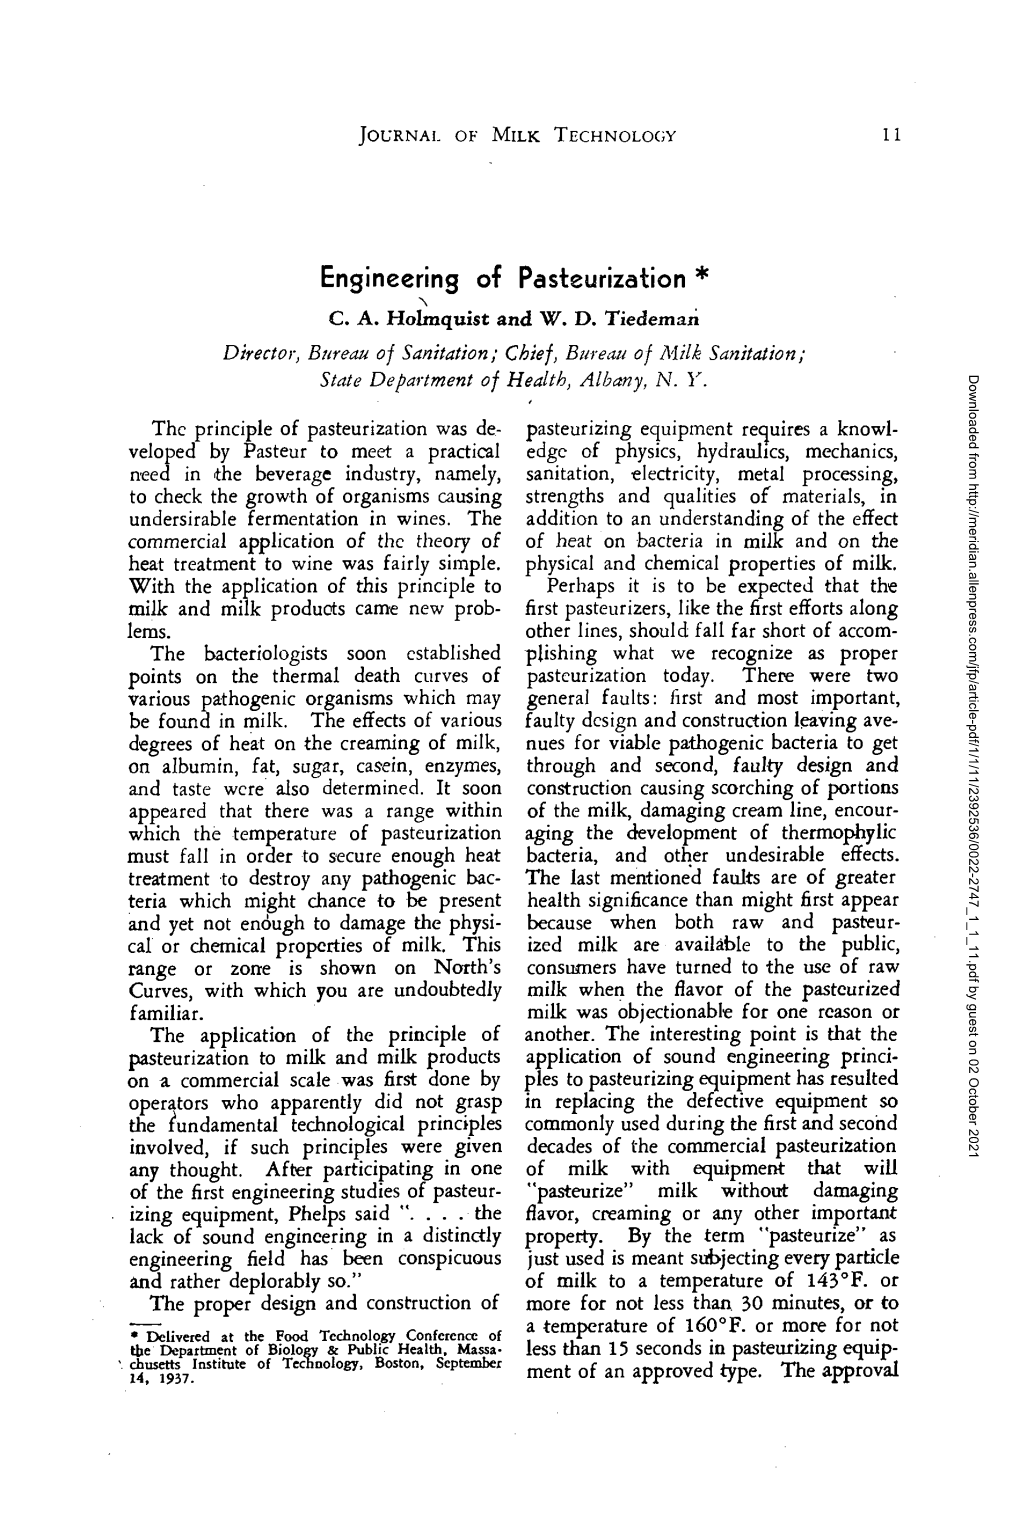 Engineering of Pasteurization * Λ · , C